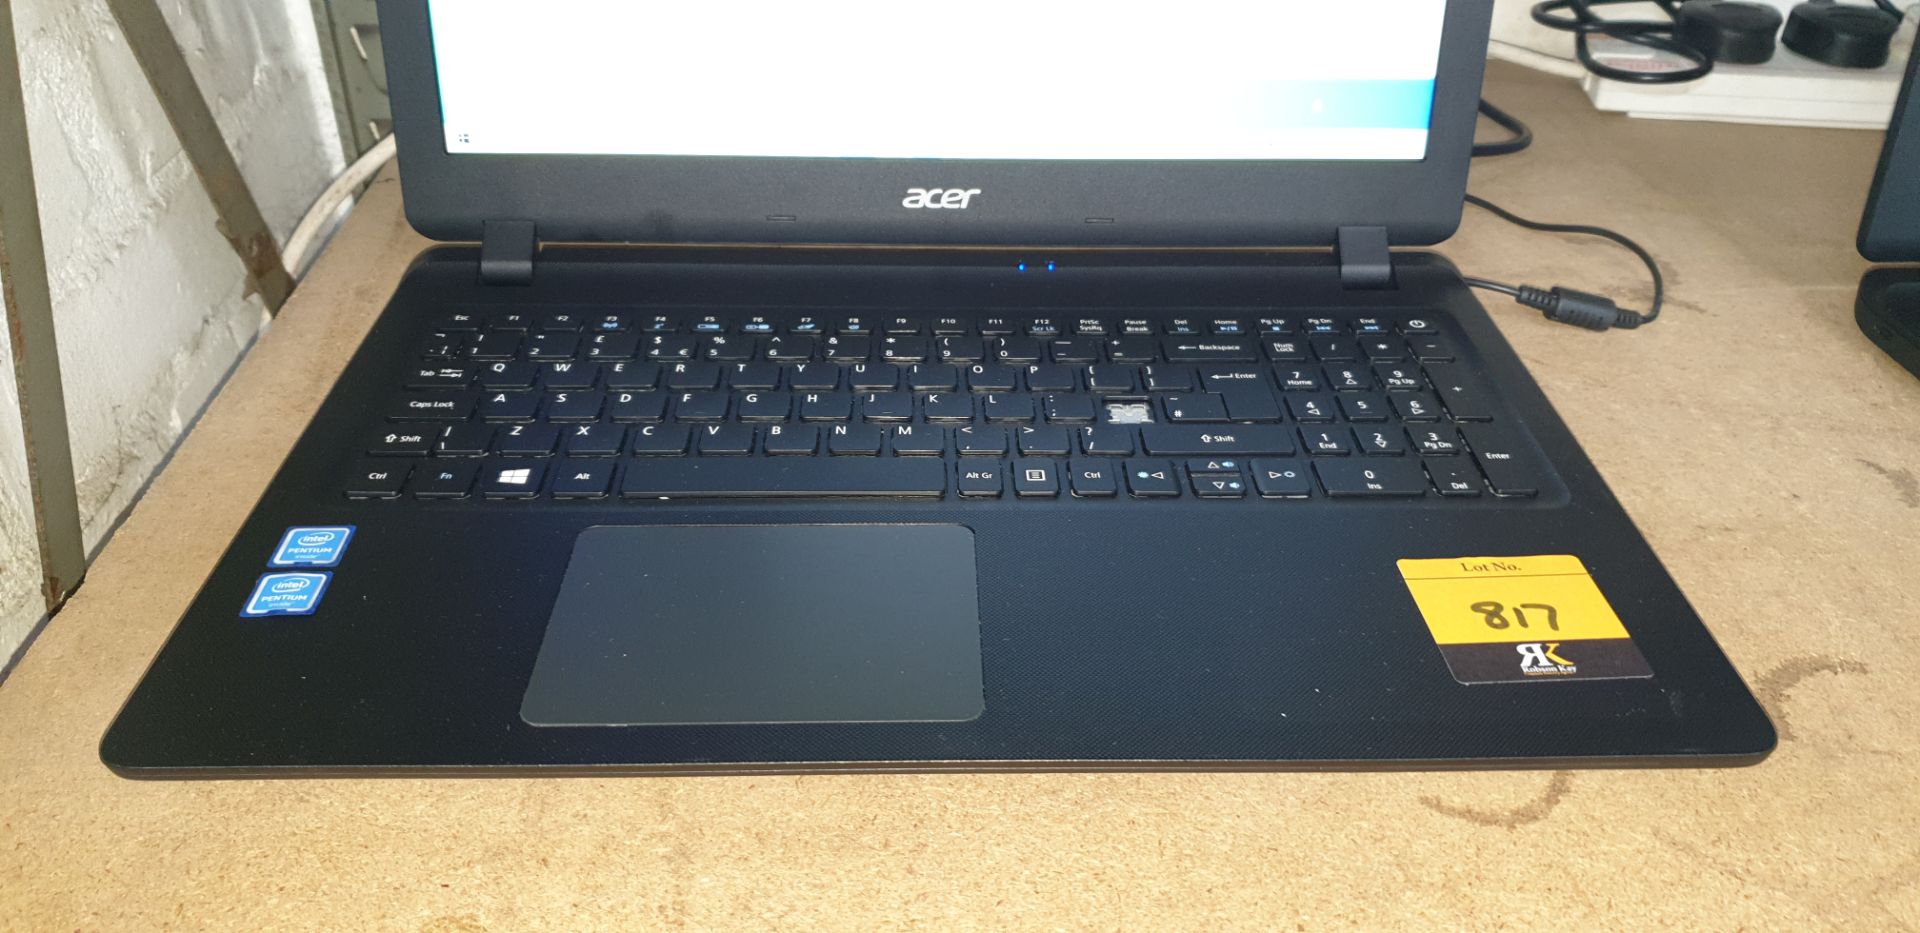 Acer notebook Acer Aspire ES1-533 15.6" Laptop Intel Pentium N4200, 1.1GHz / 2.5GHz Turbo Quad Core - Image 2 of 10